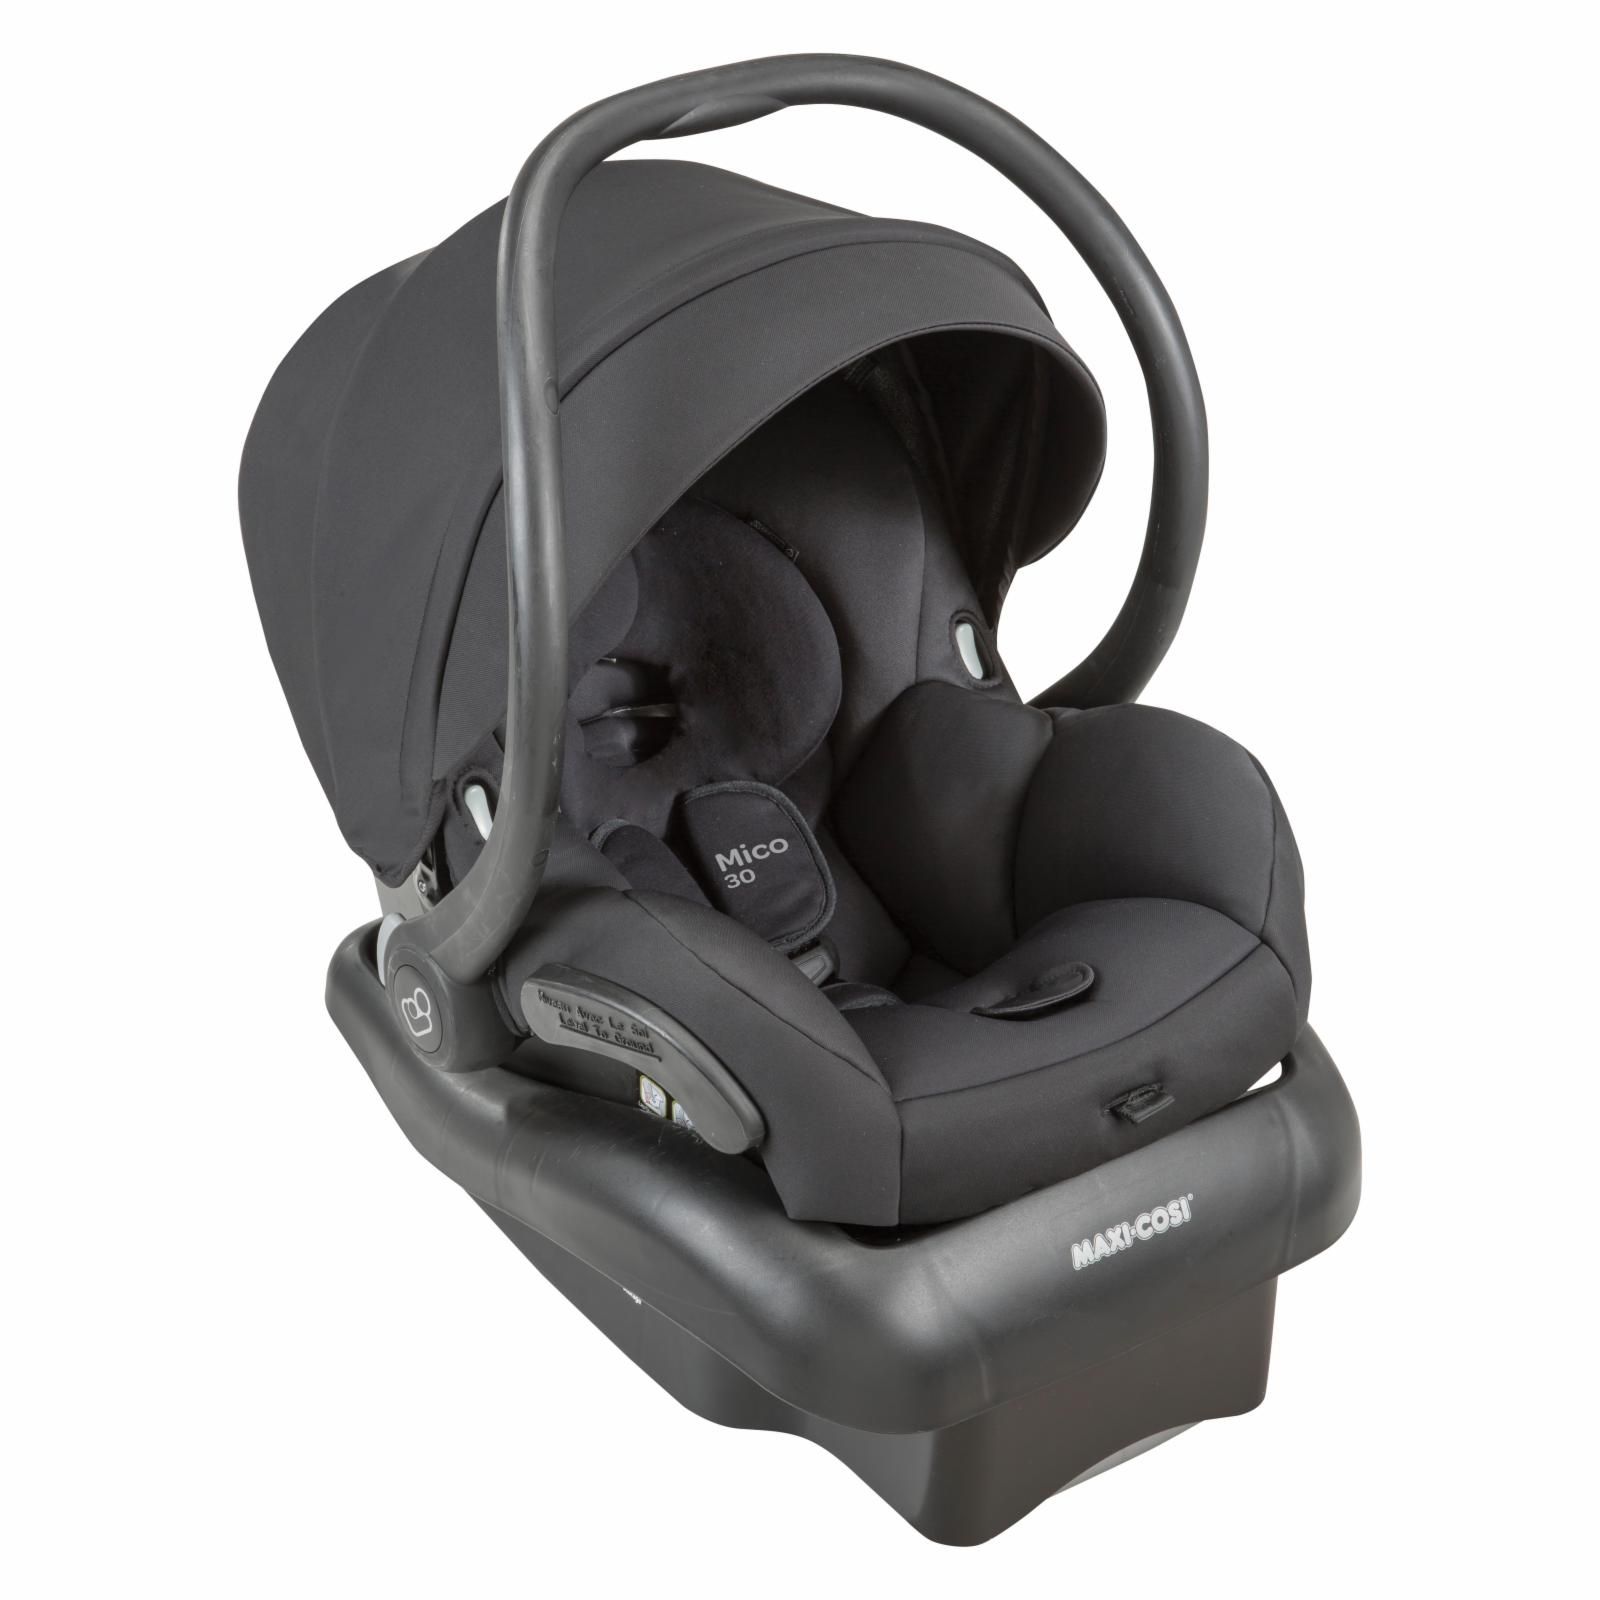 Maxi-Cosi Mico 30 Infant Car Seat | Hayneedle